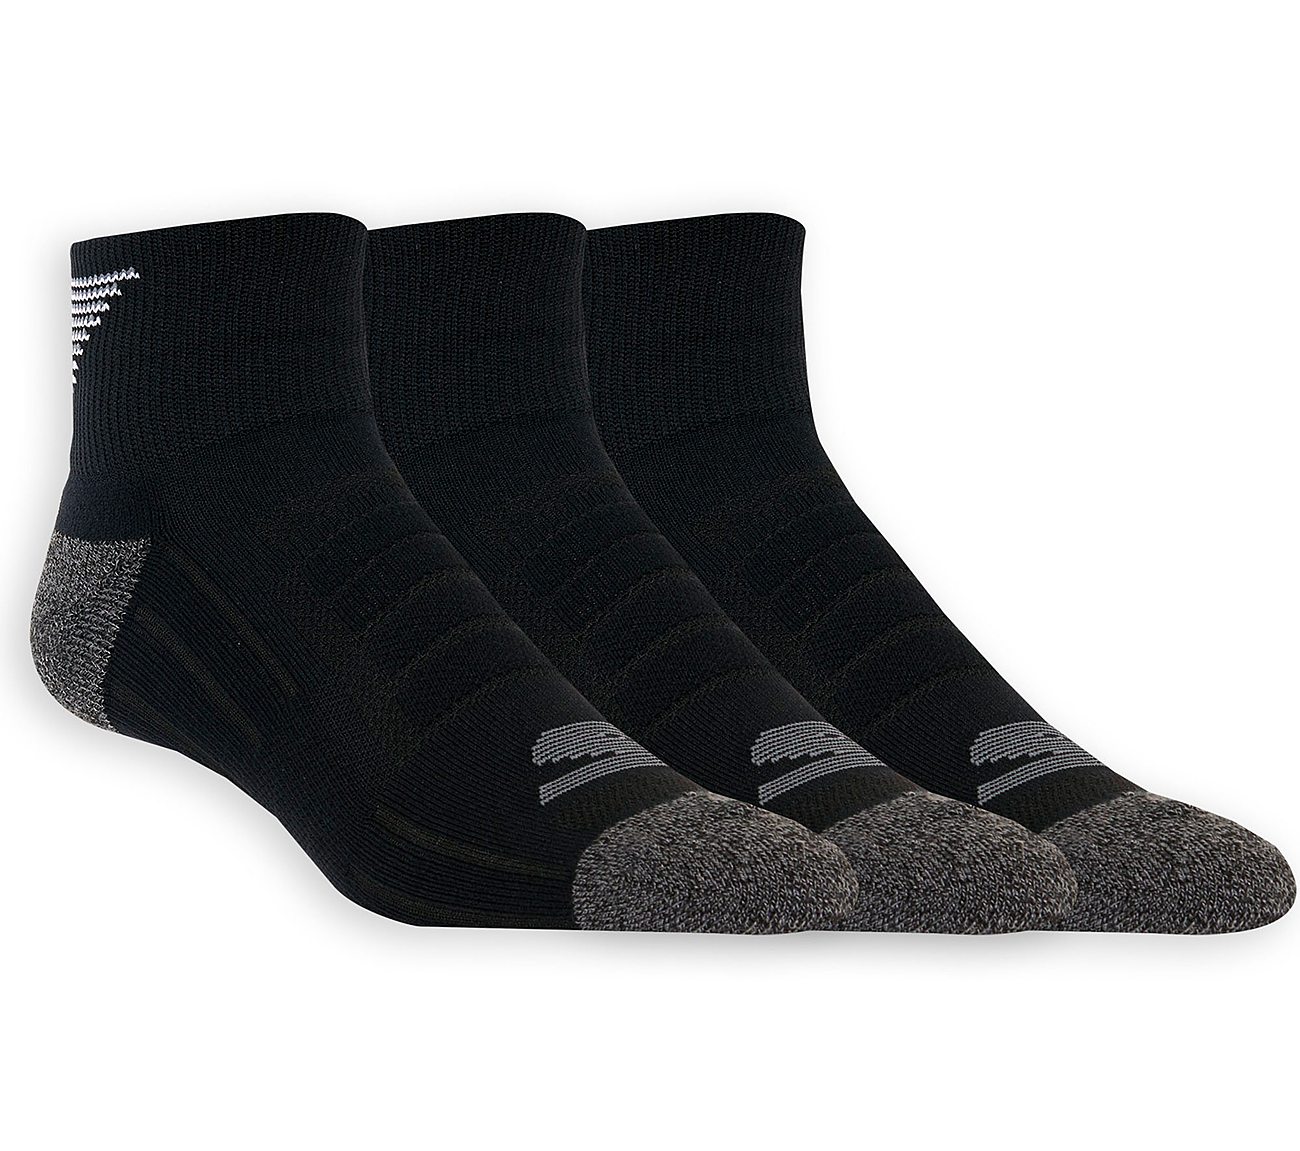 Buy SKECHERS 3 Pack Quarter Crew Athletic Socks Accessories Shoes